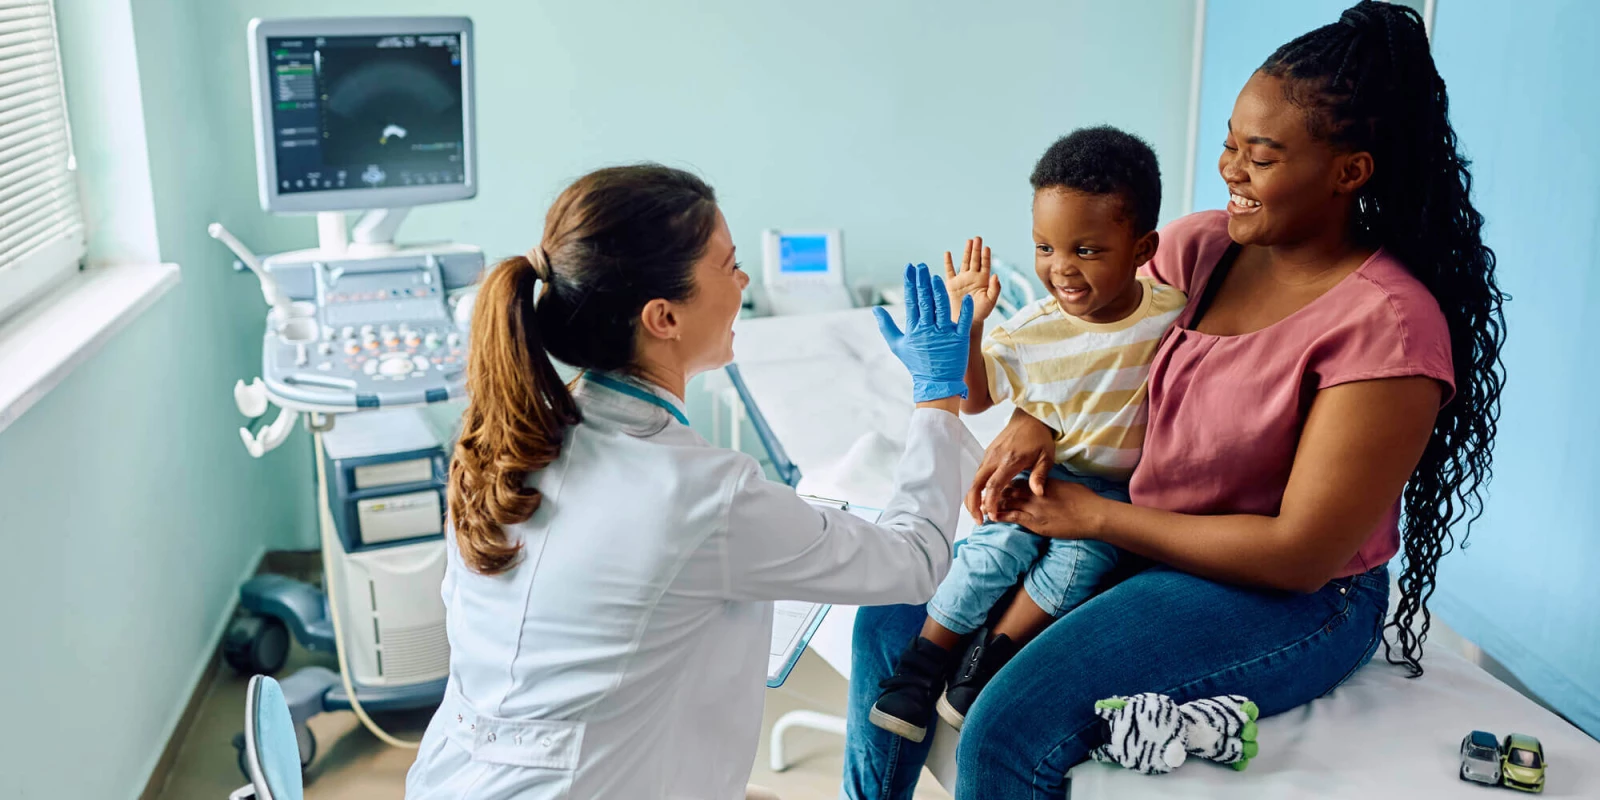 Pediatric Critical Care Medicine